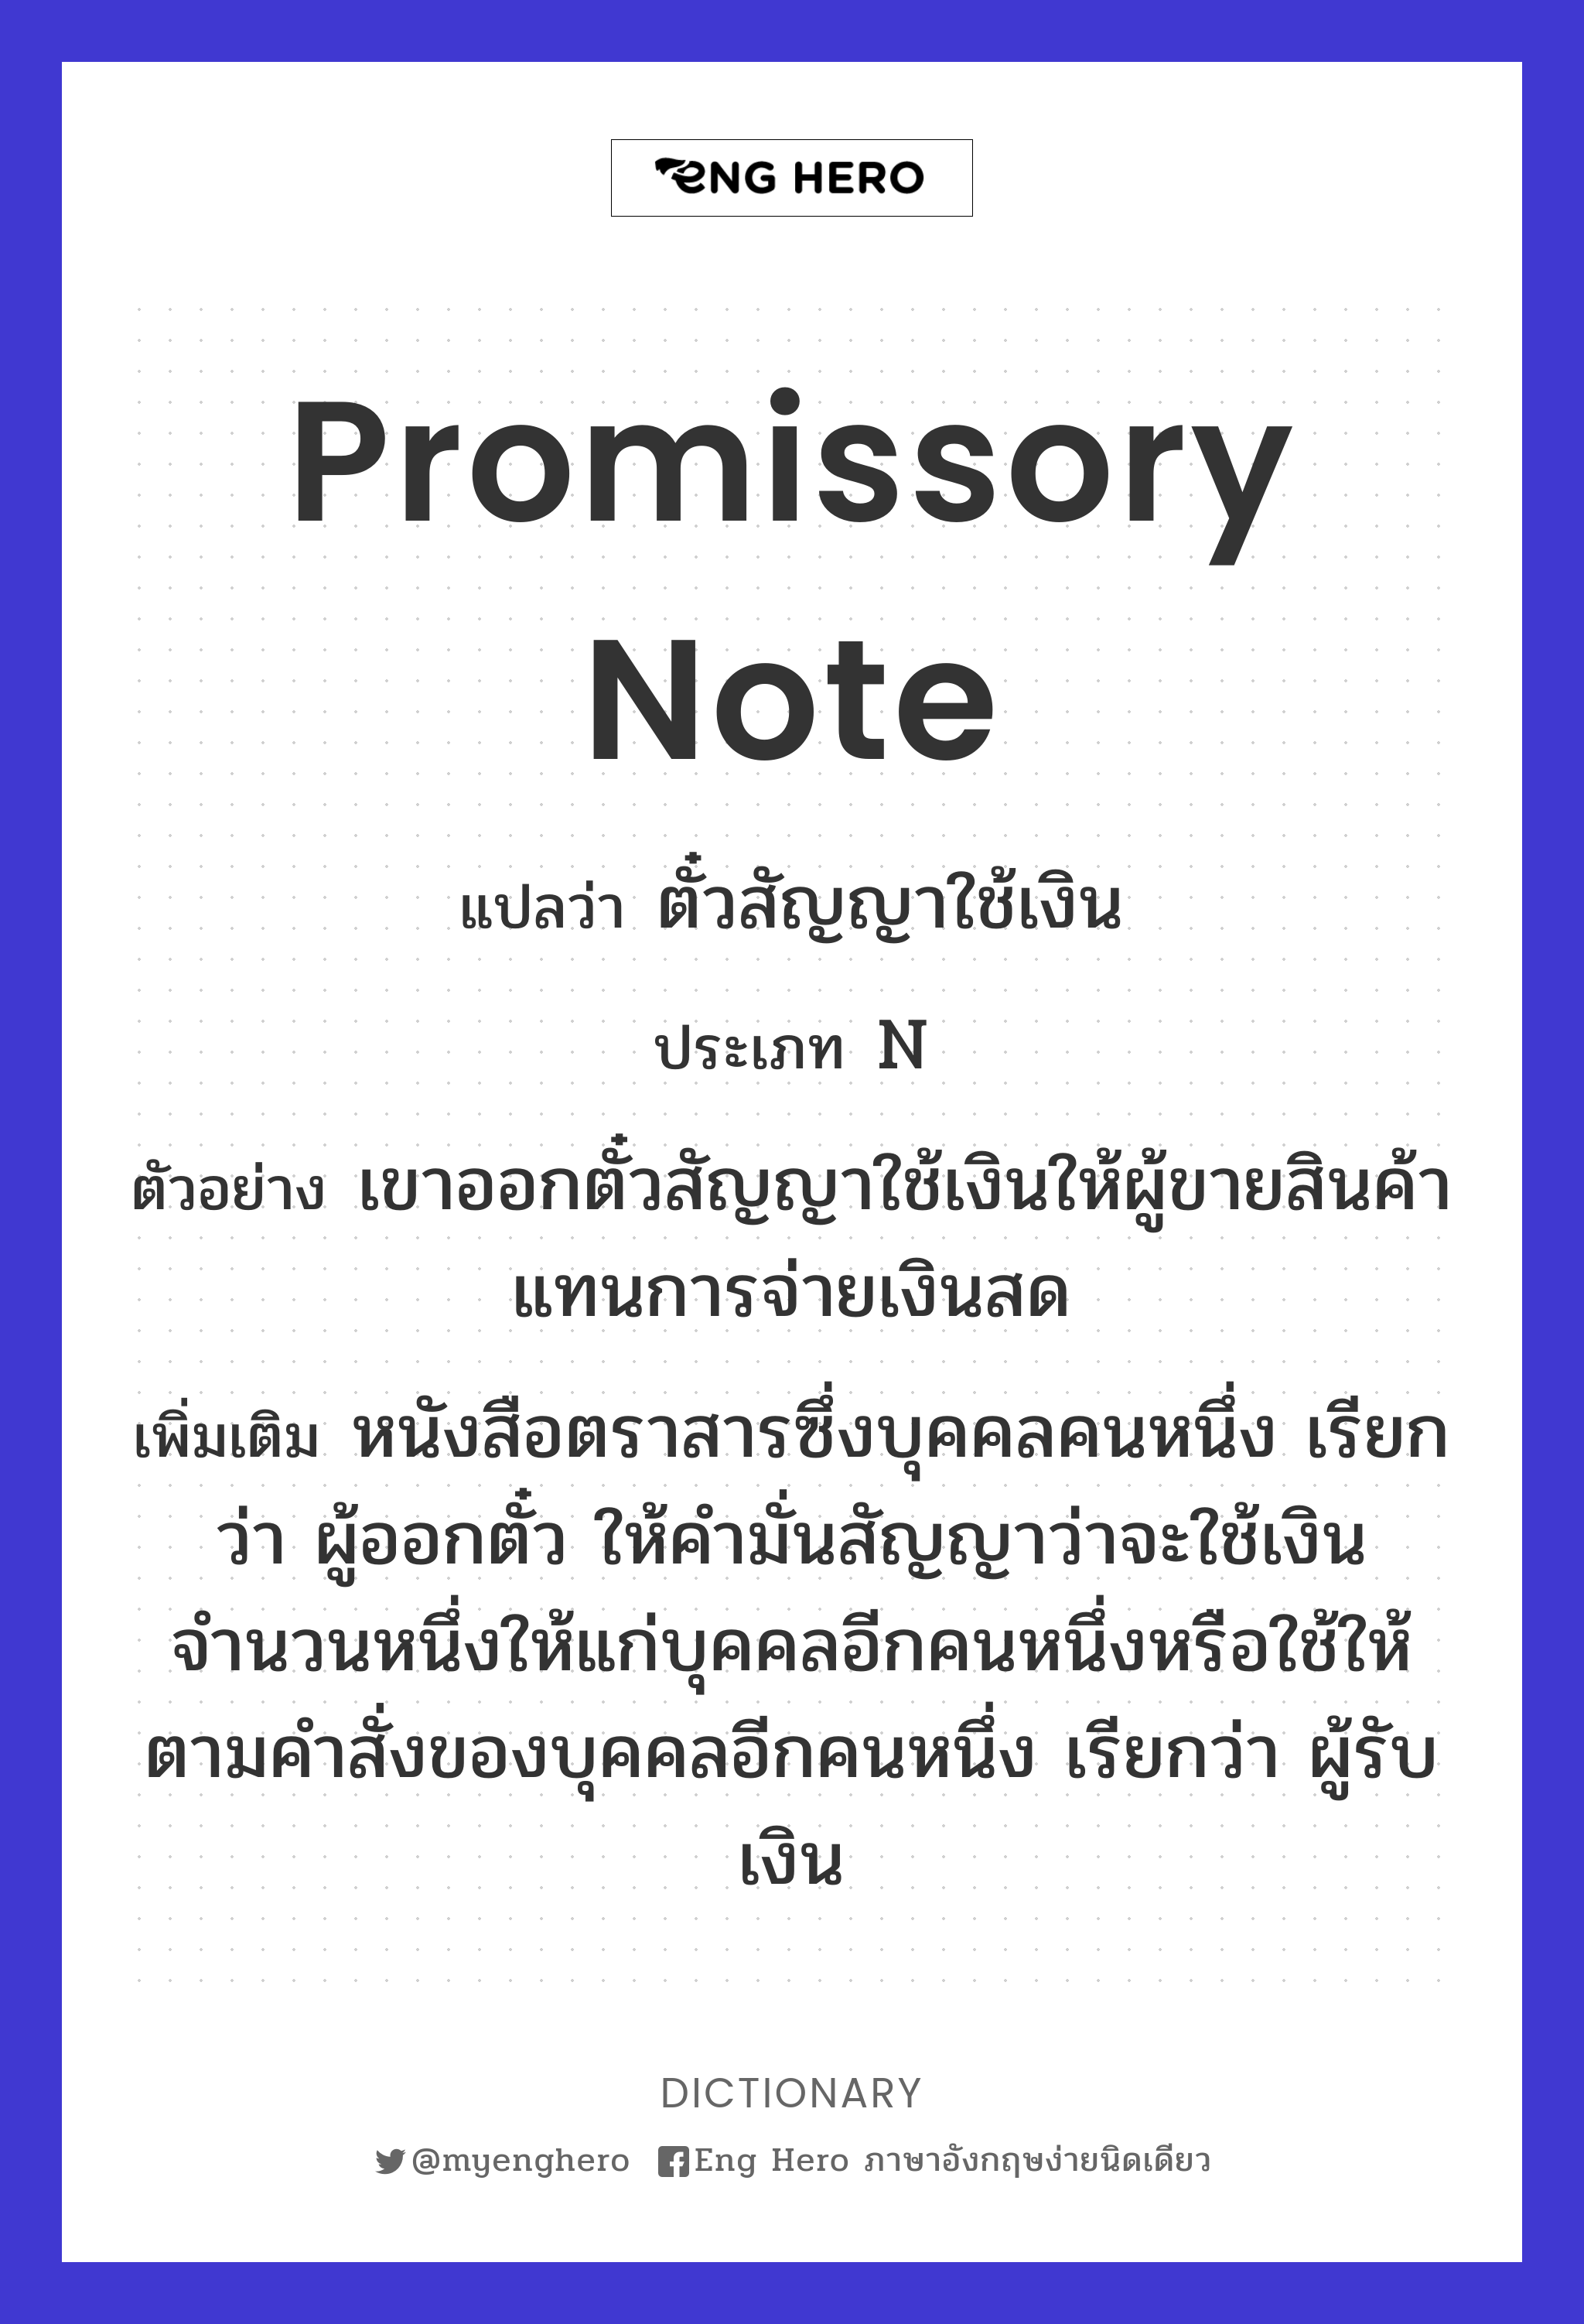 promissory note